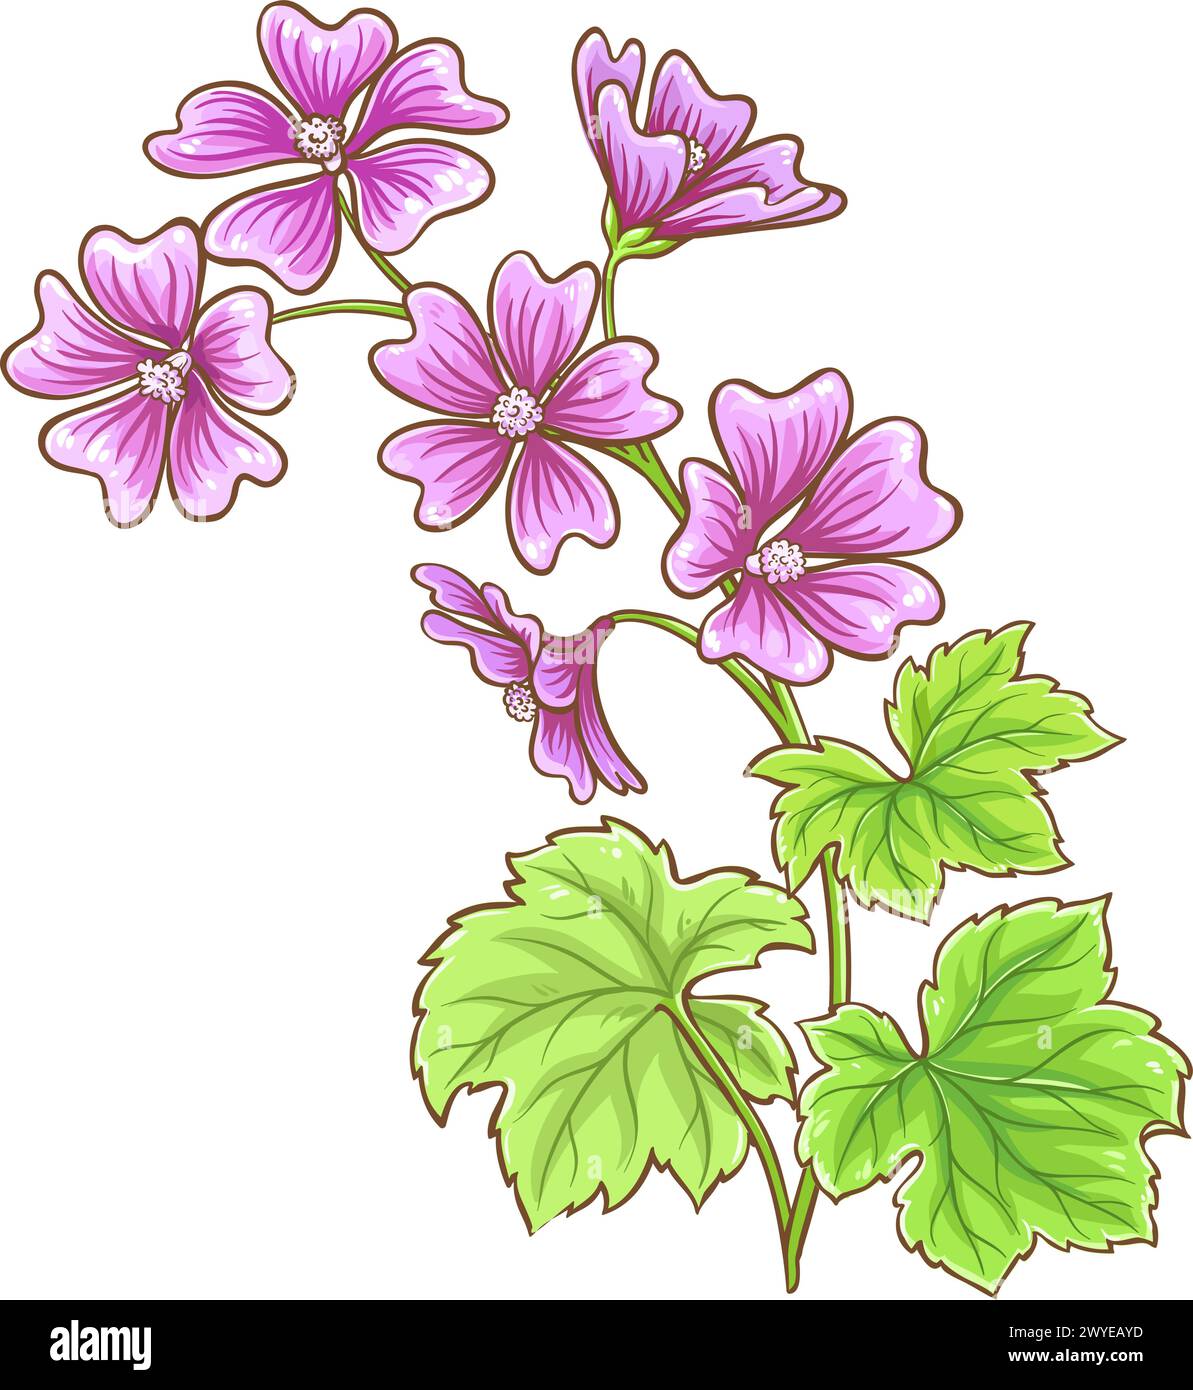 Malva Plant Colored Detailed Illustration. Stock Vector